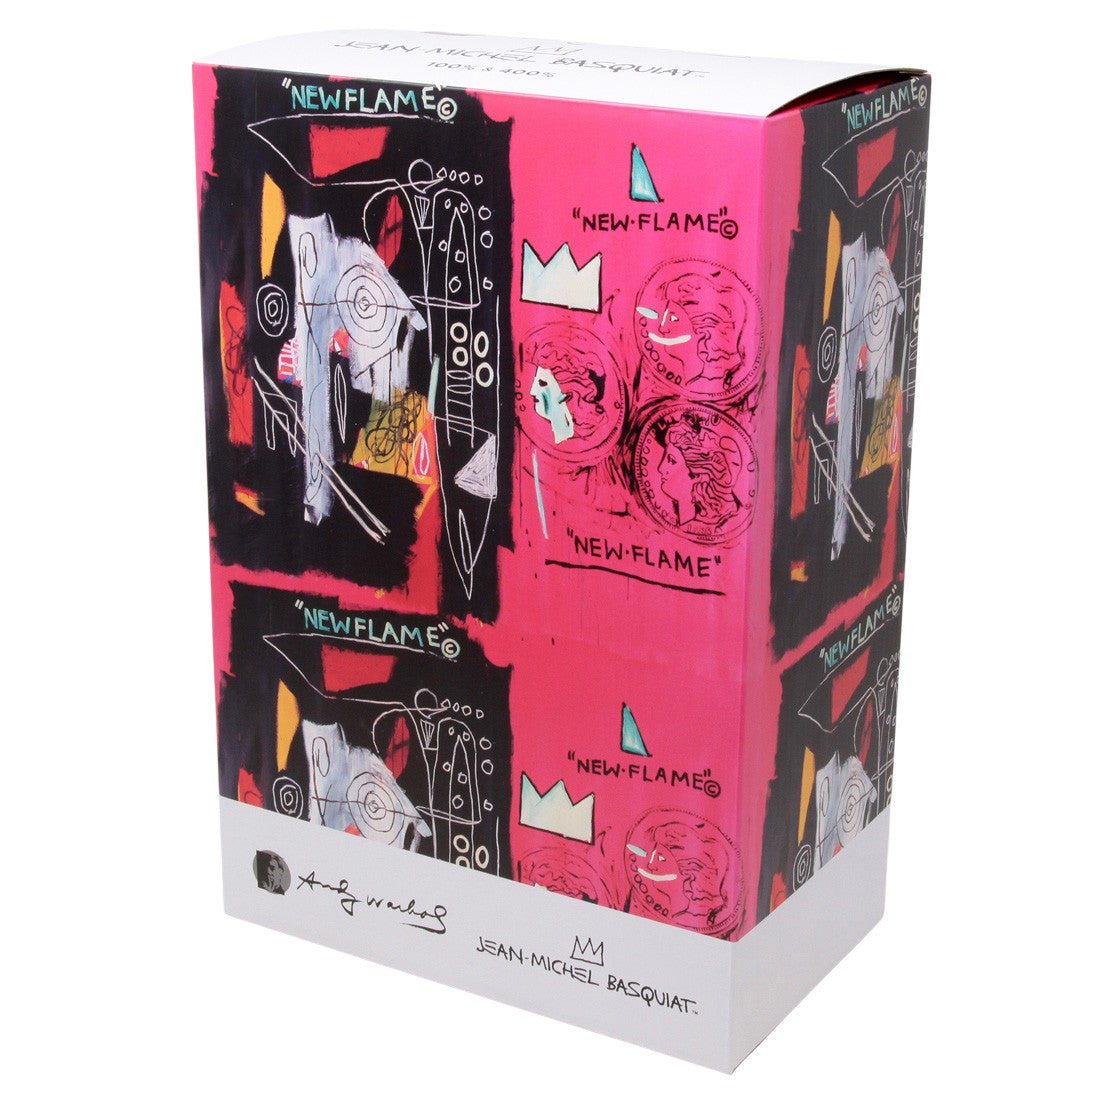 Andy Warhol x Jean-Michel Basquiat (New Flame) 400% & 100% Bearbrick set